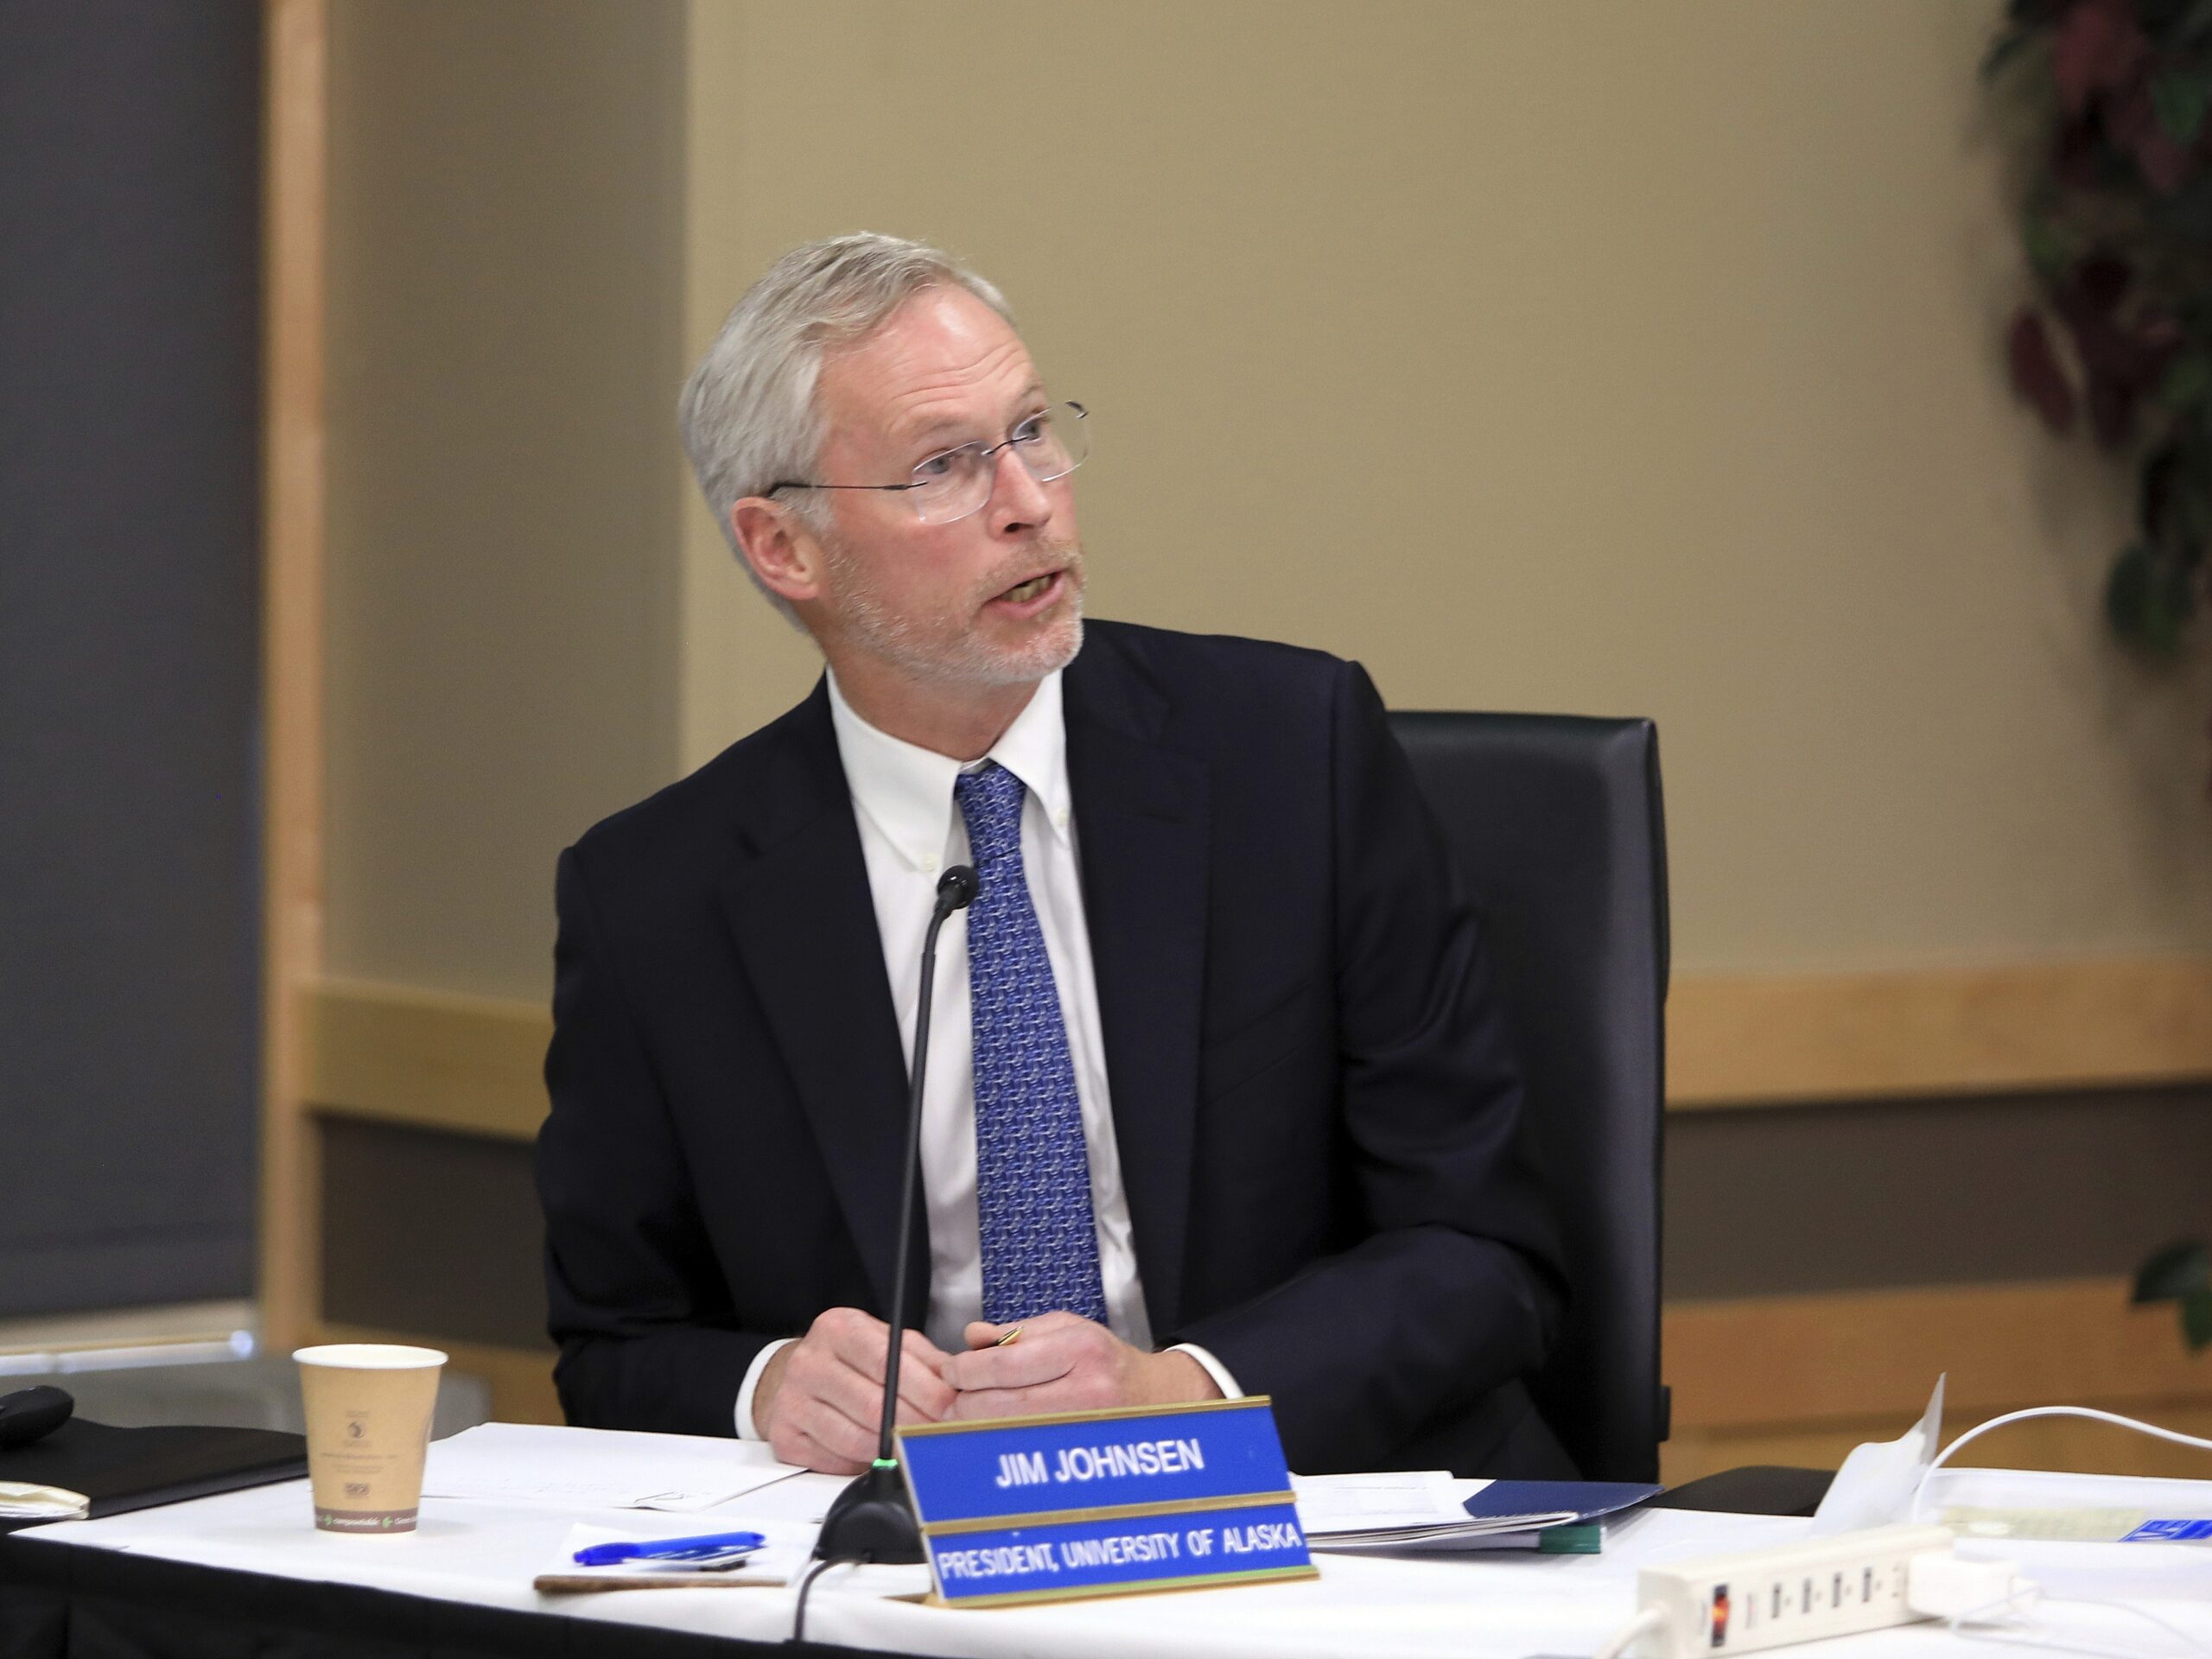 Jim Johnsen at a meeting on the University of Alaska System budget